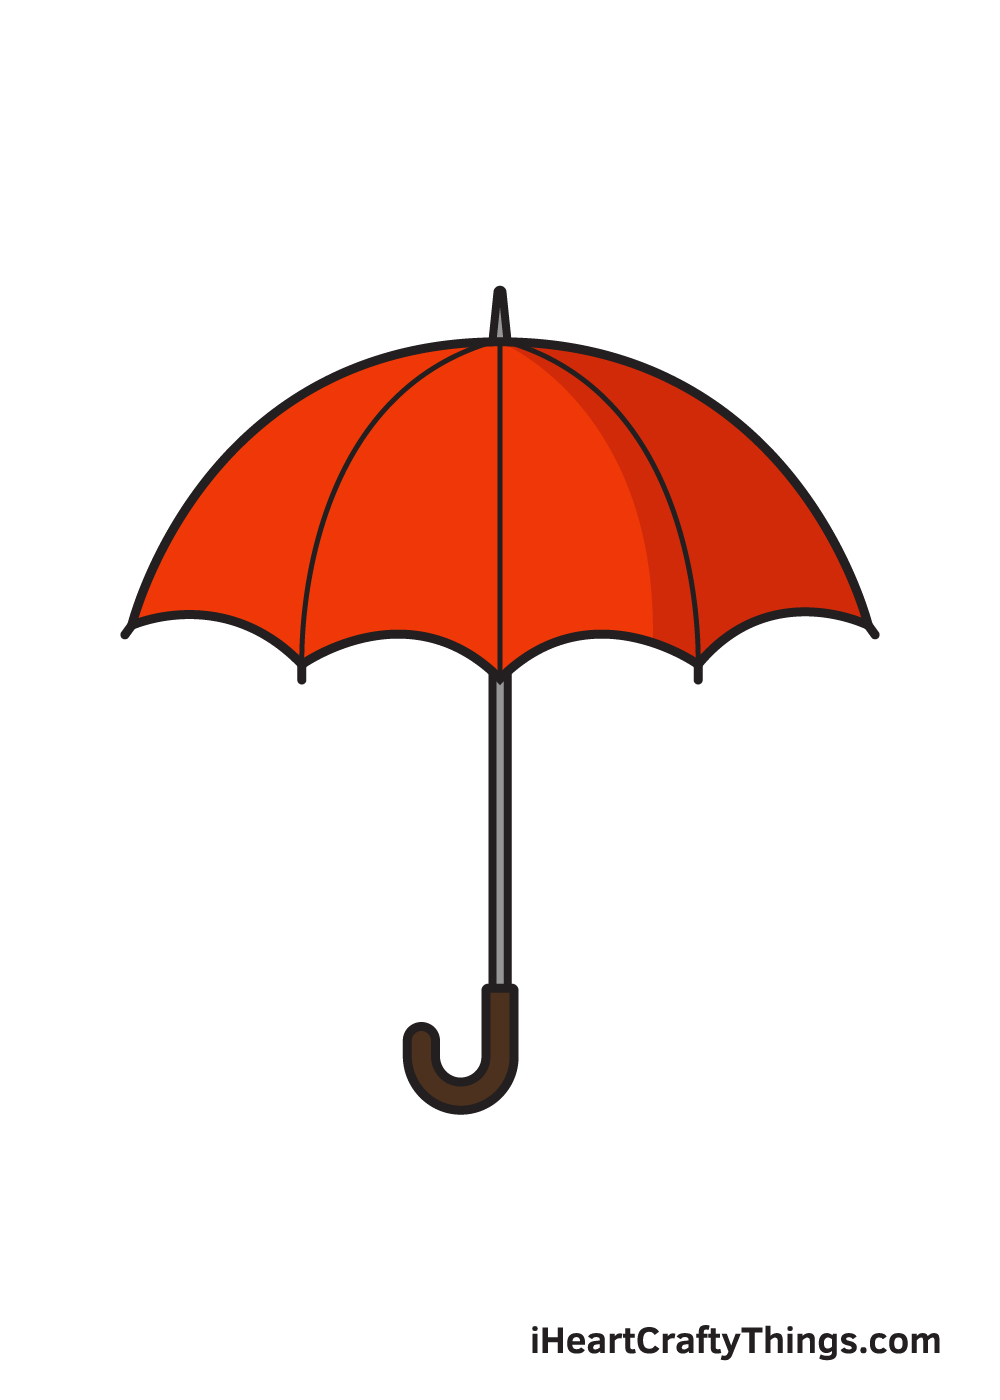 Picture Of An Umbrella - KibrisPDR